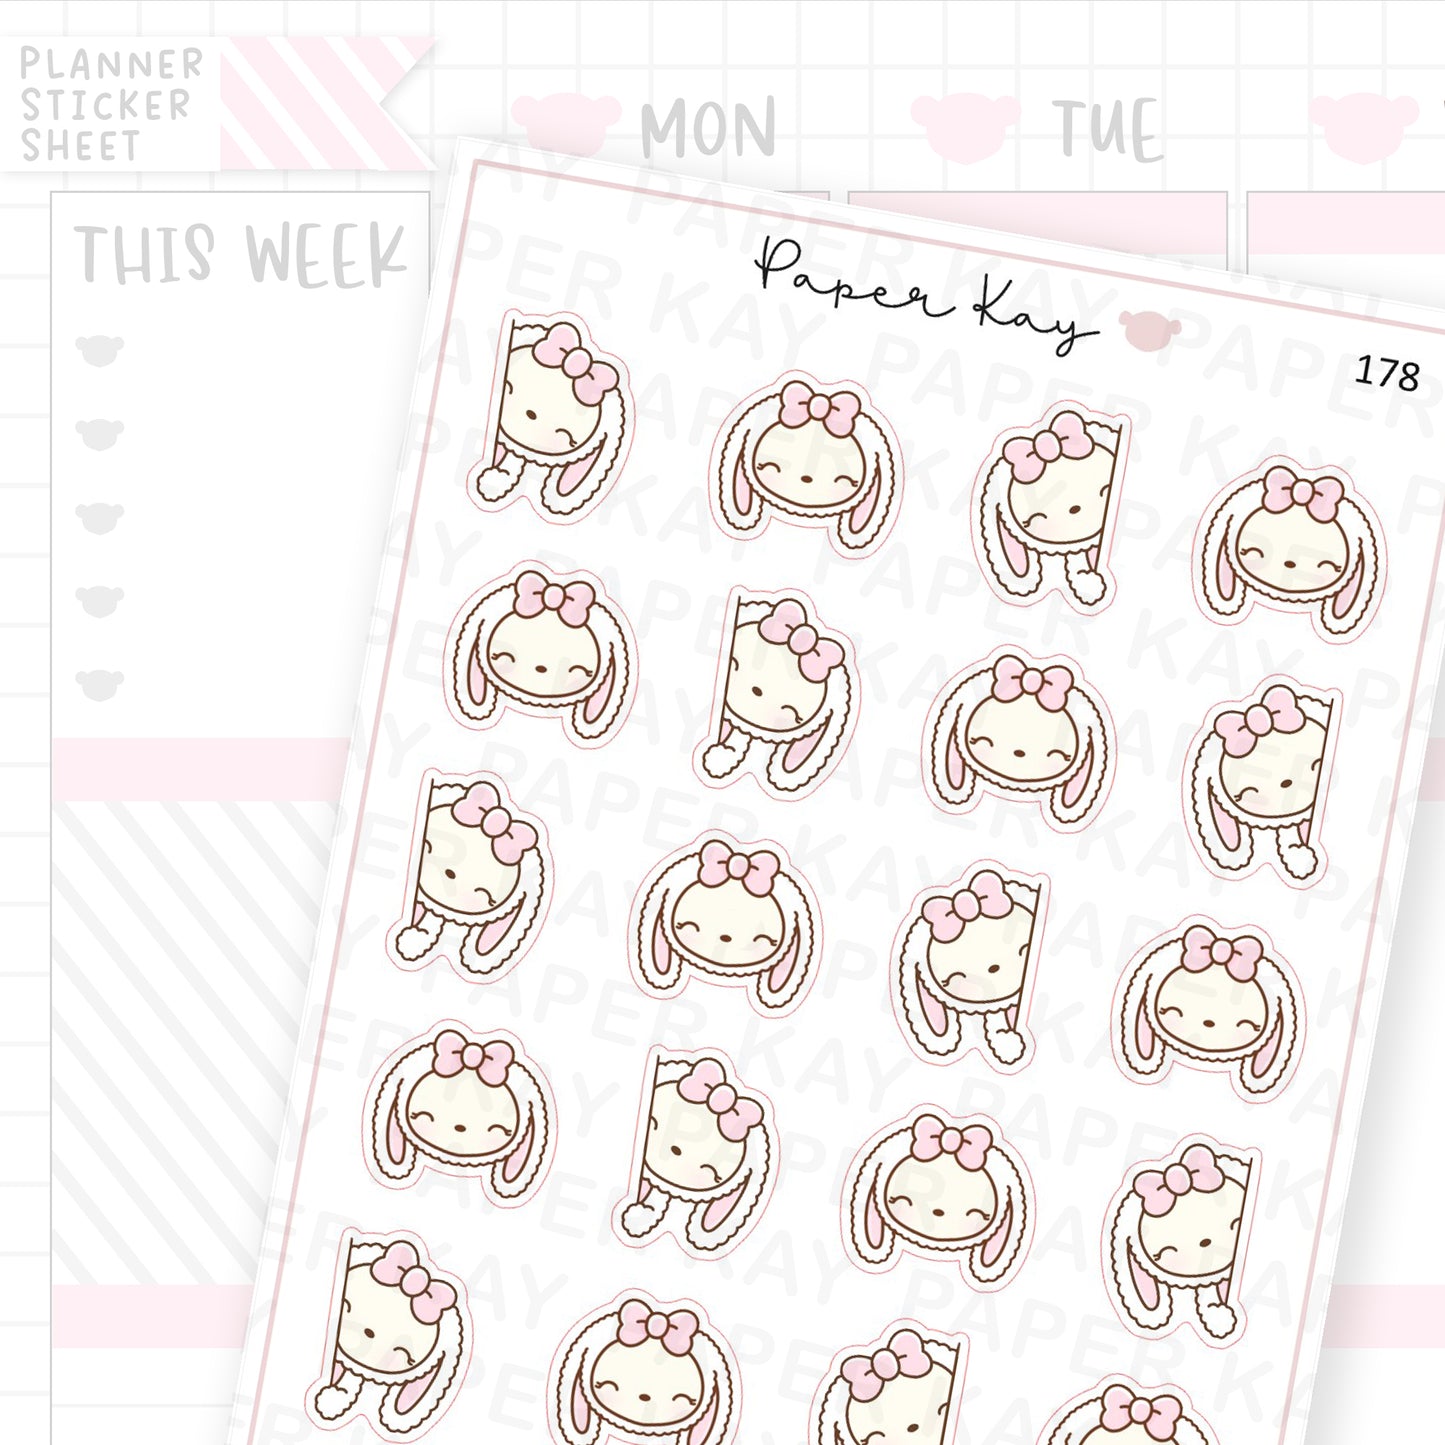 Planner Bunny - Peek-a-boo Sticker Sheet